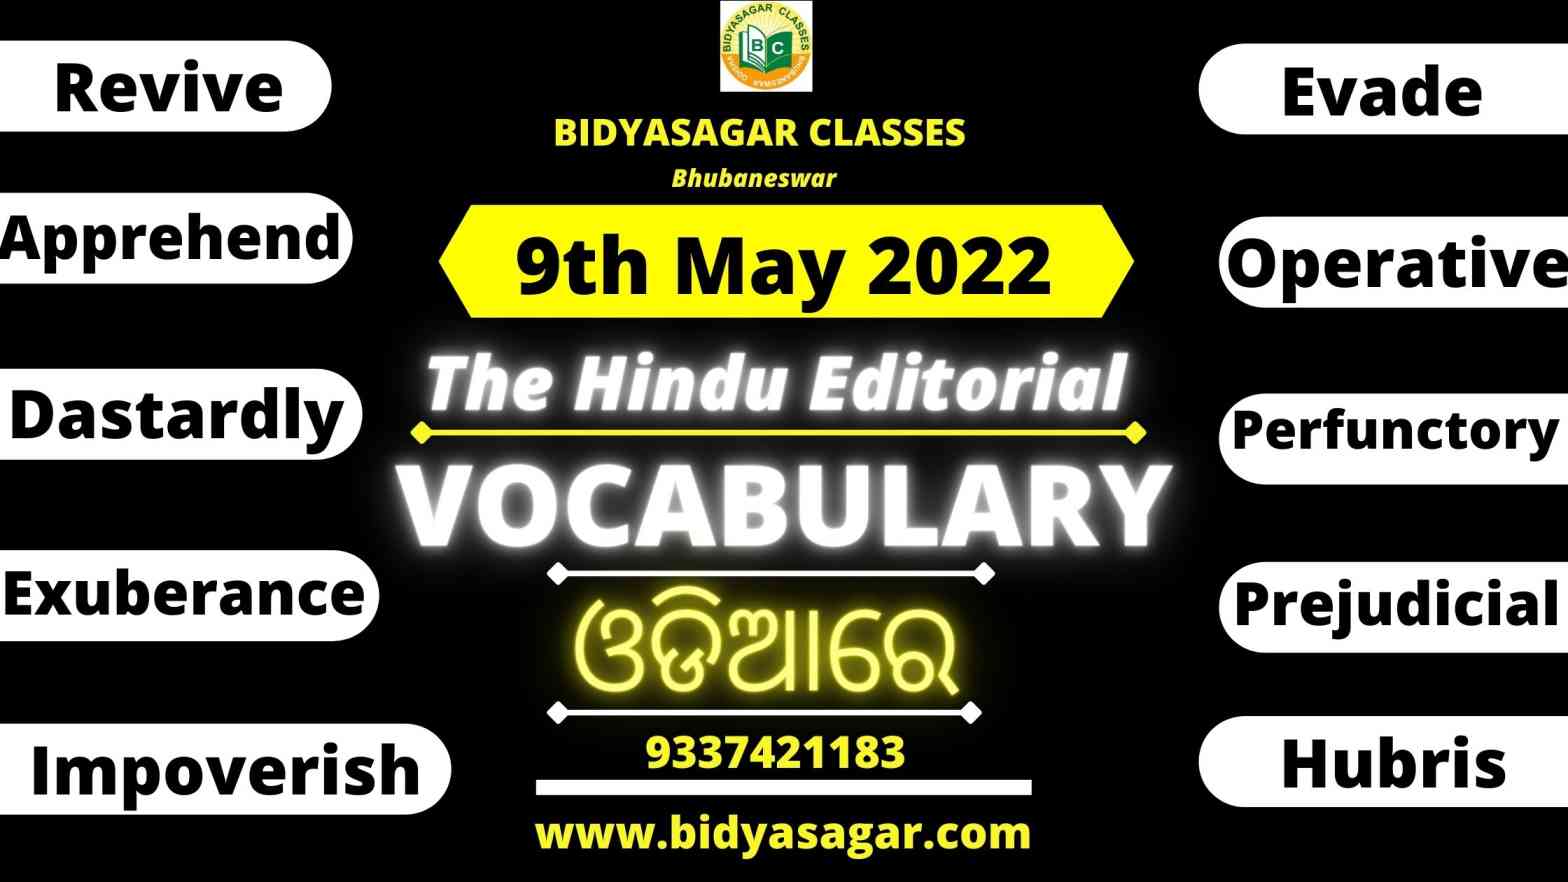 The Hindu Editorial Vocabulary of 9th May 2022